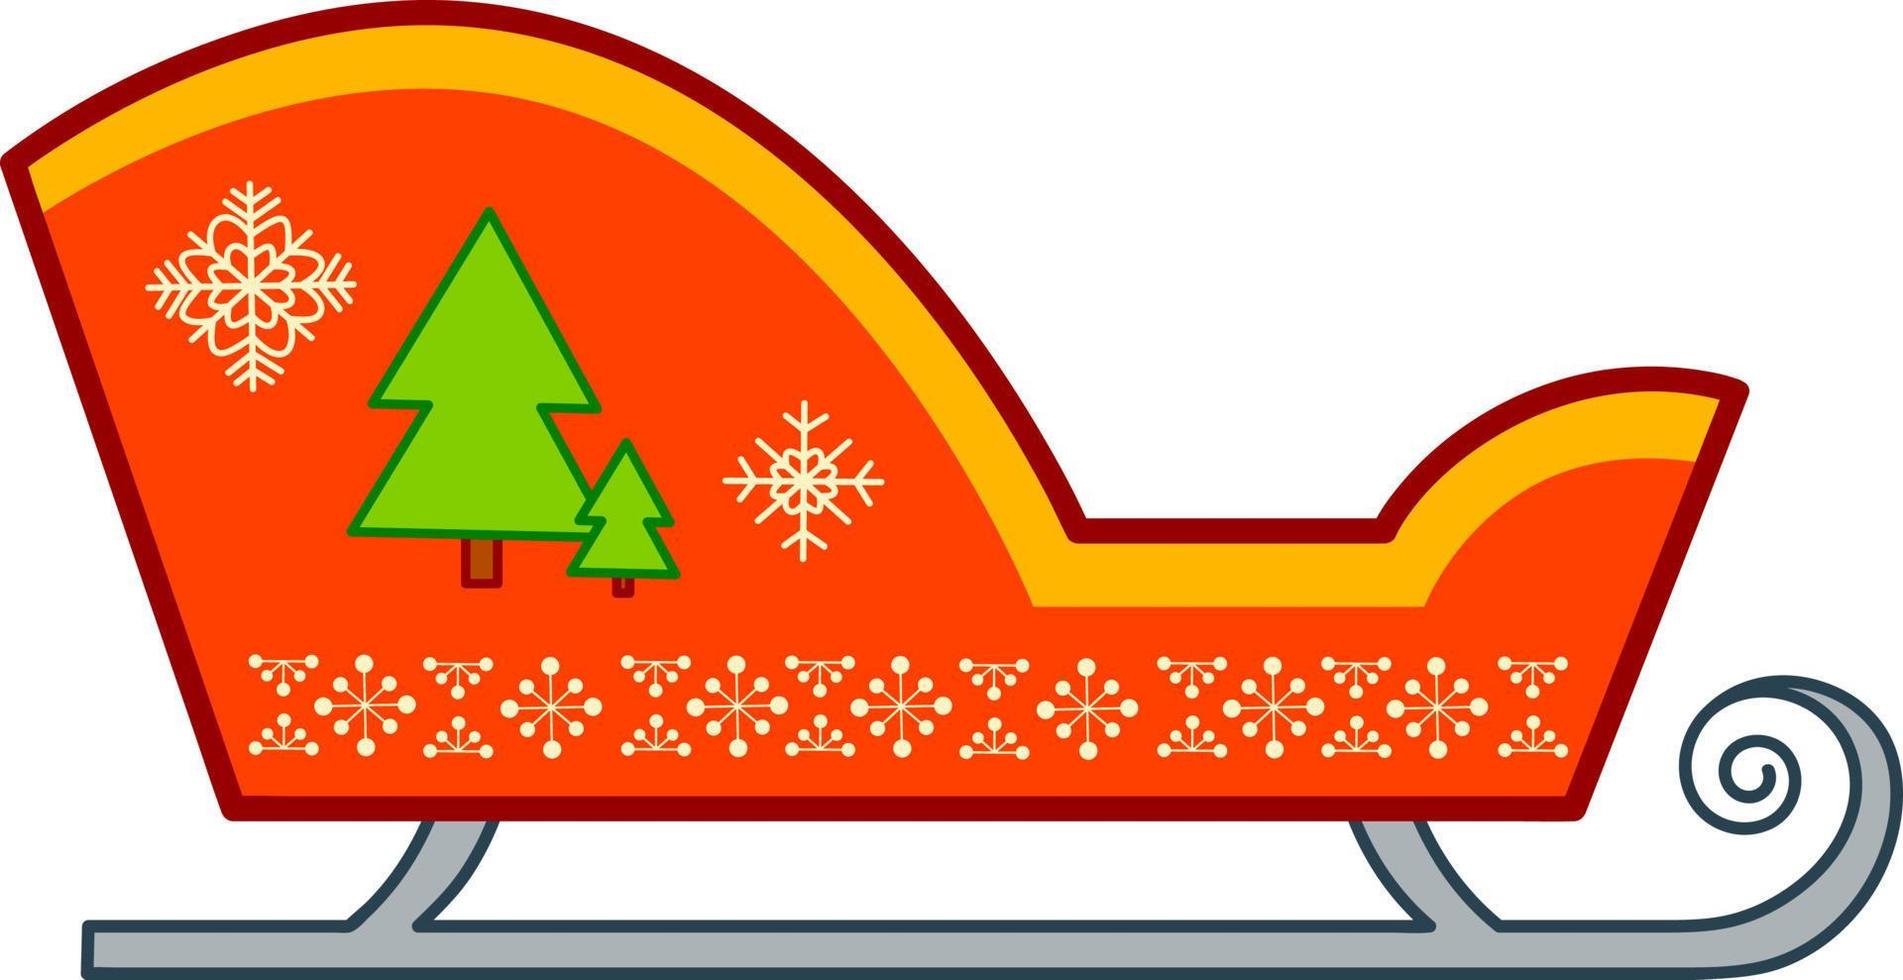 Christmas cartoons clip art. Christmas sled vector illustration